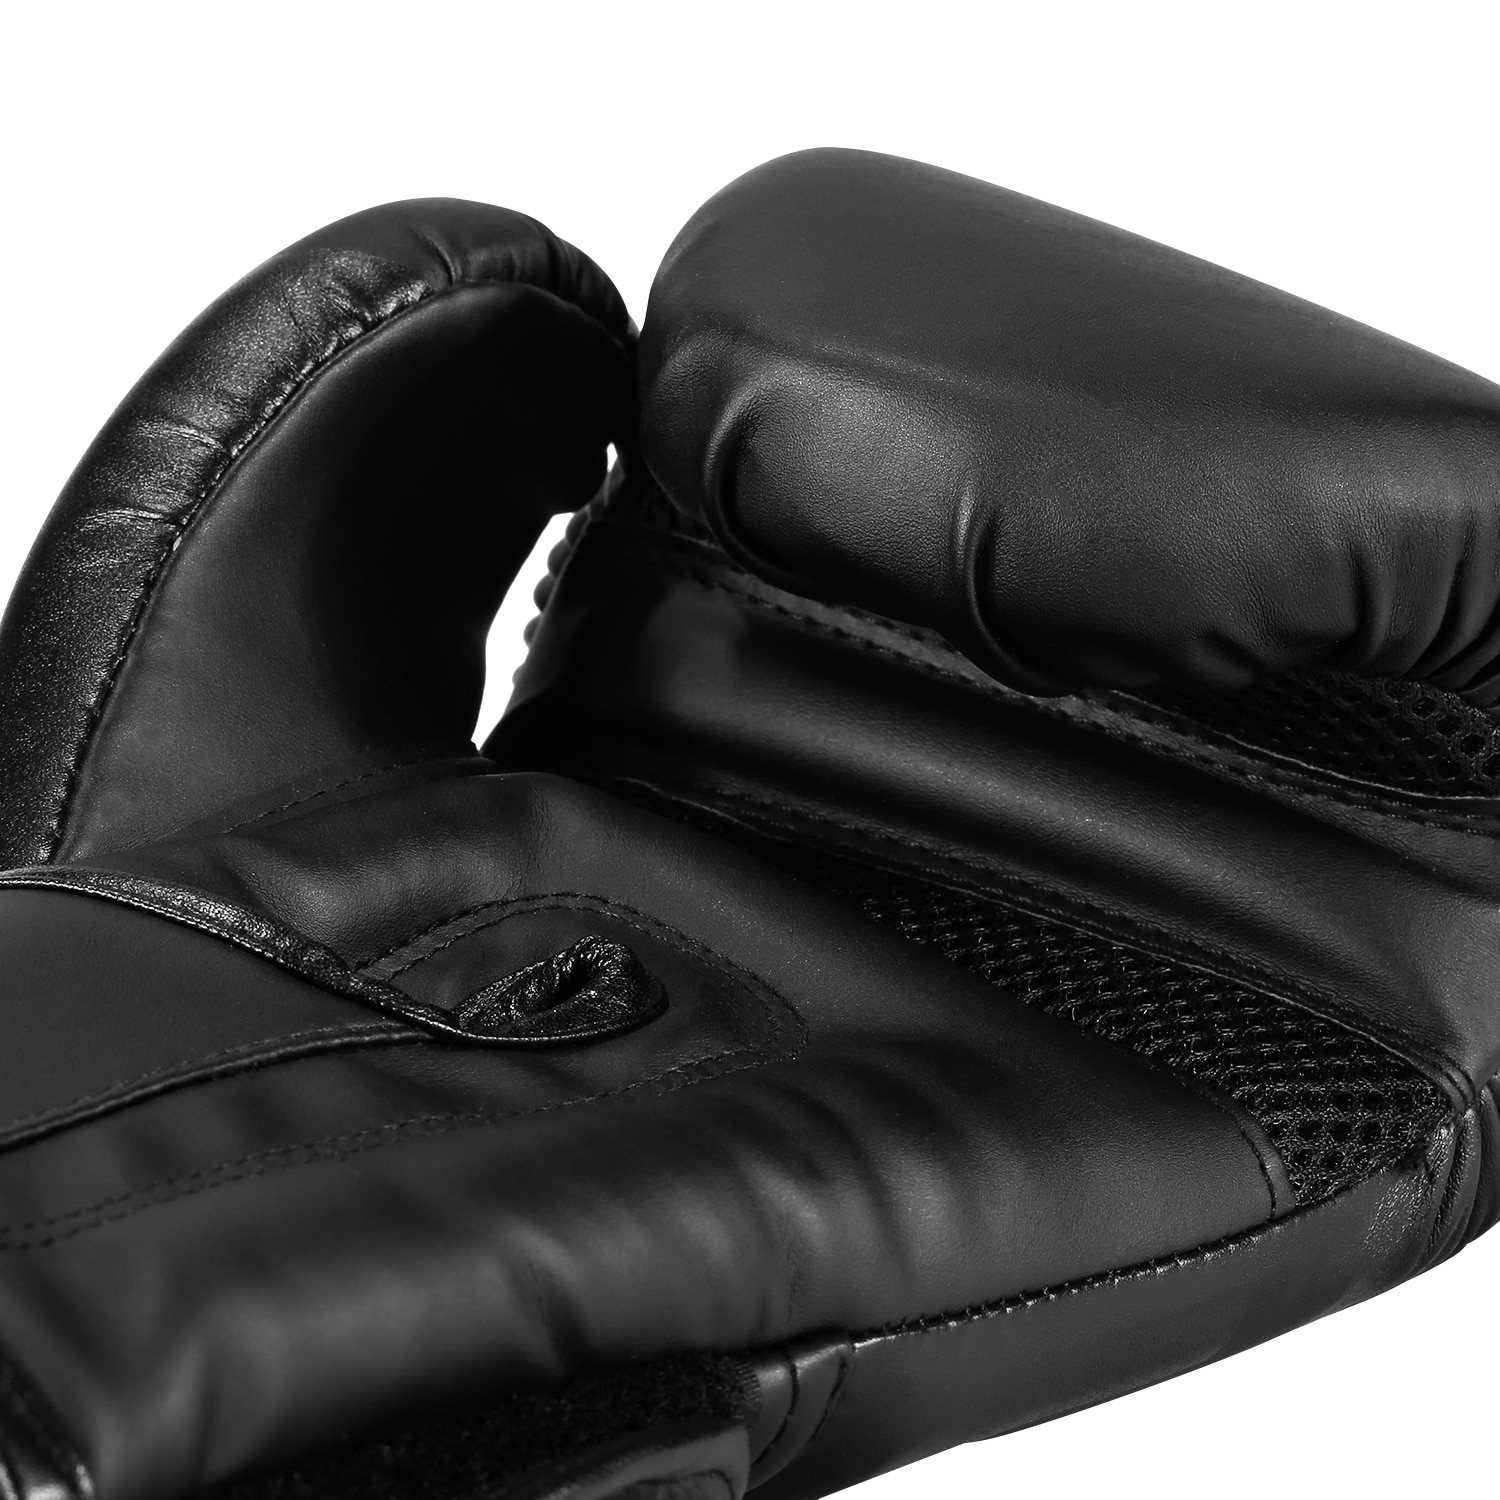 Adult Male Female Kick Boxing Gloves PU Leather Muay Thai Karate